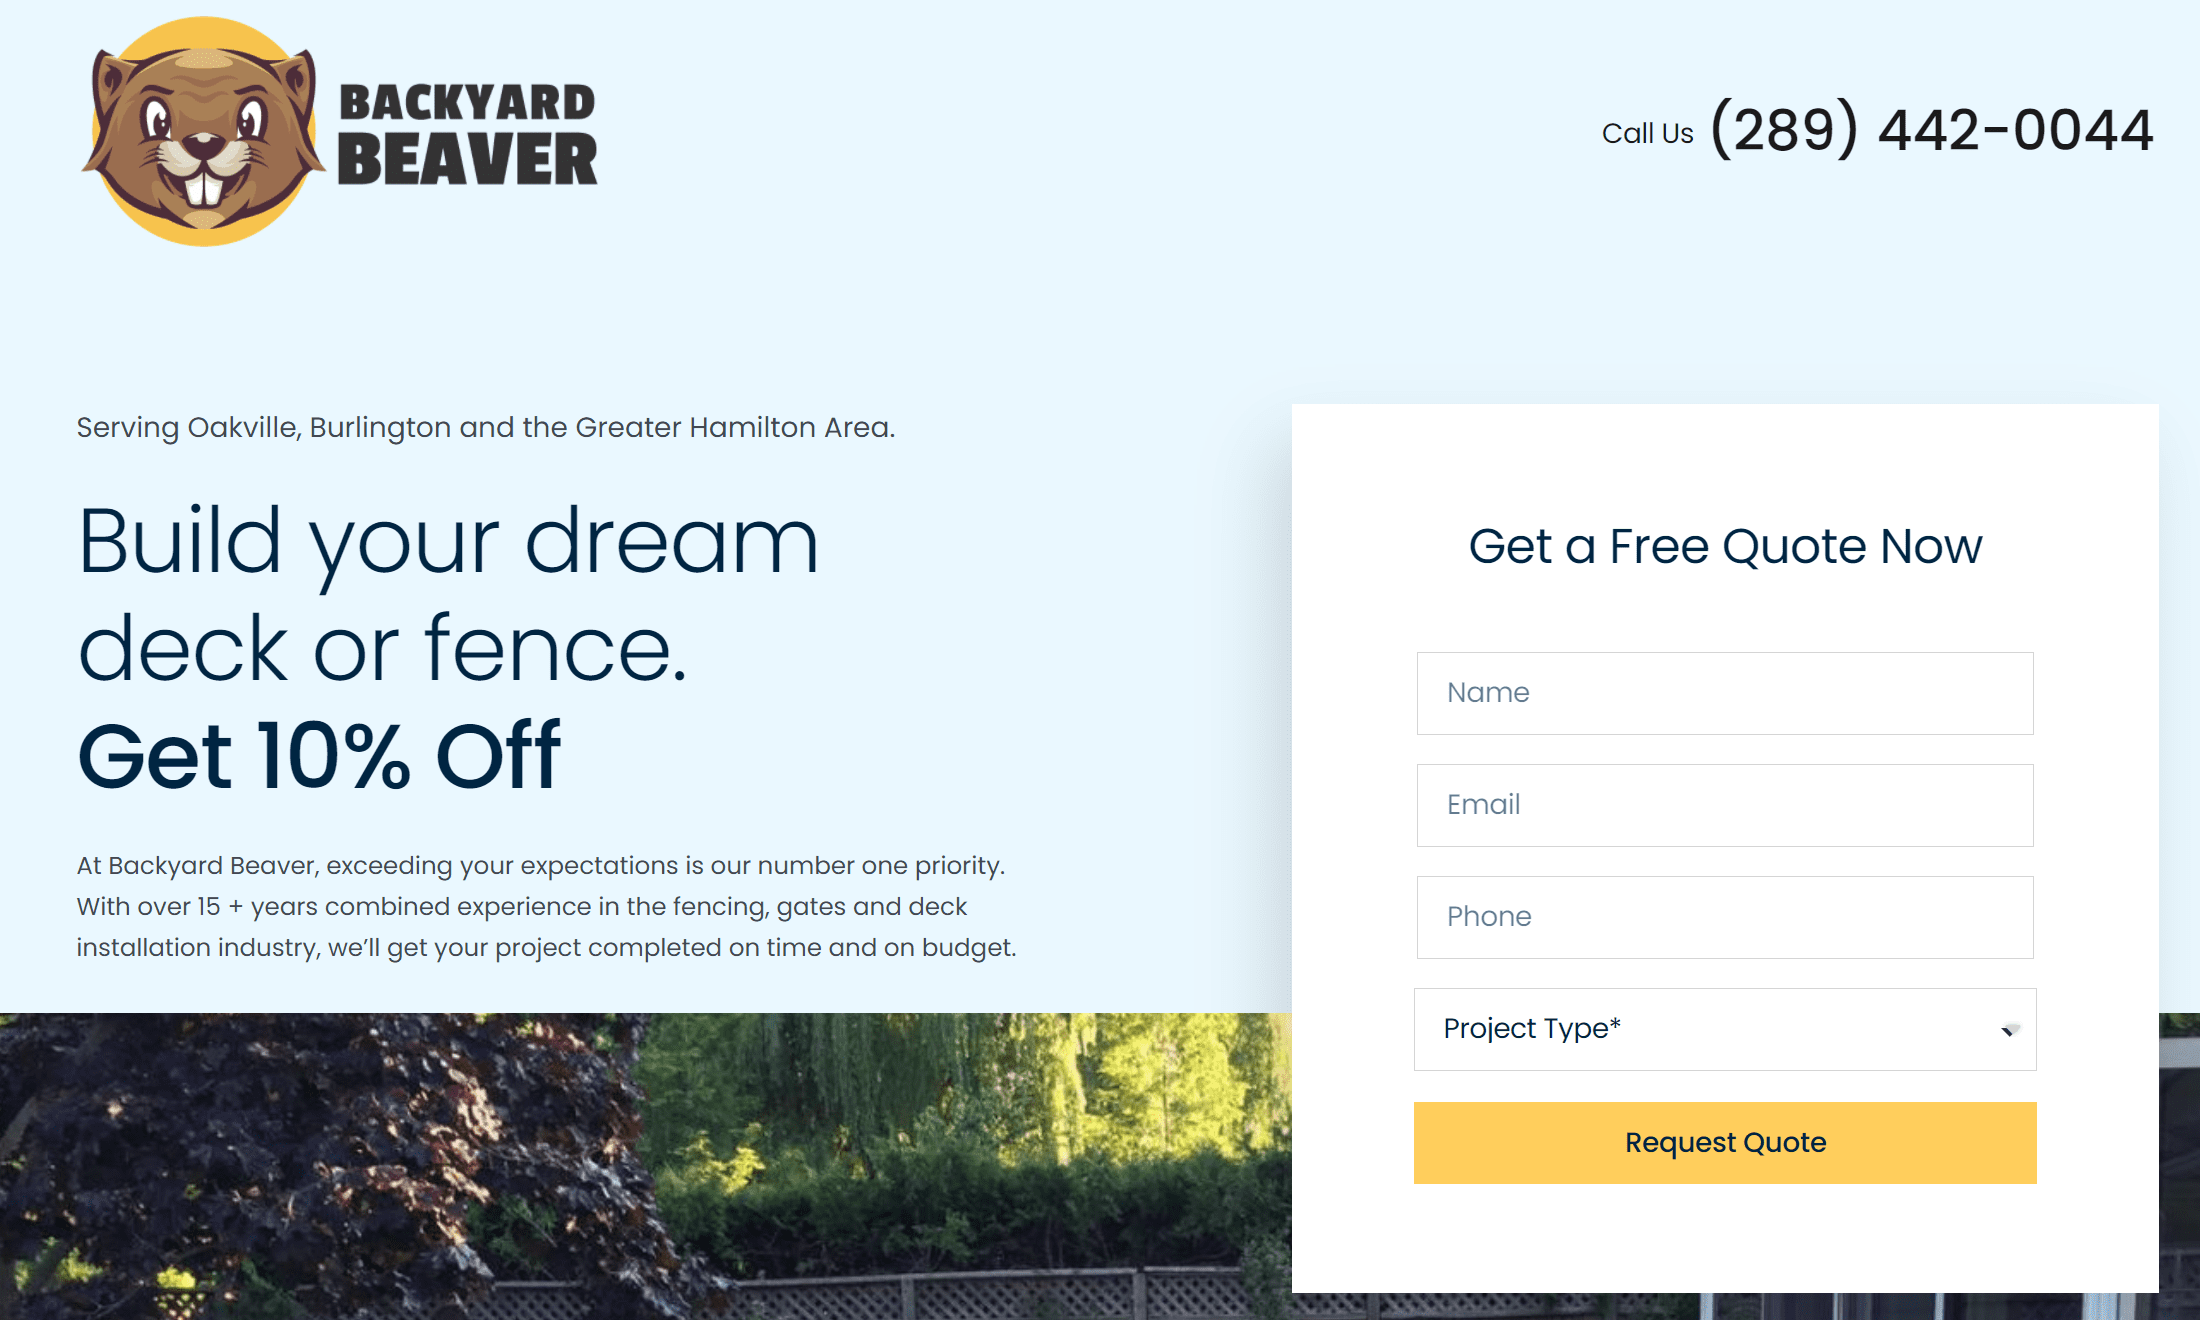 New website design for Backyard Beaver during the summer peak months